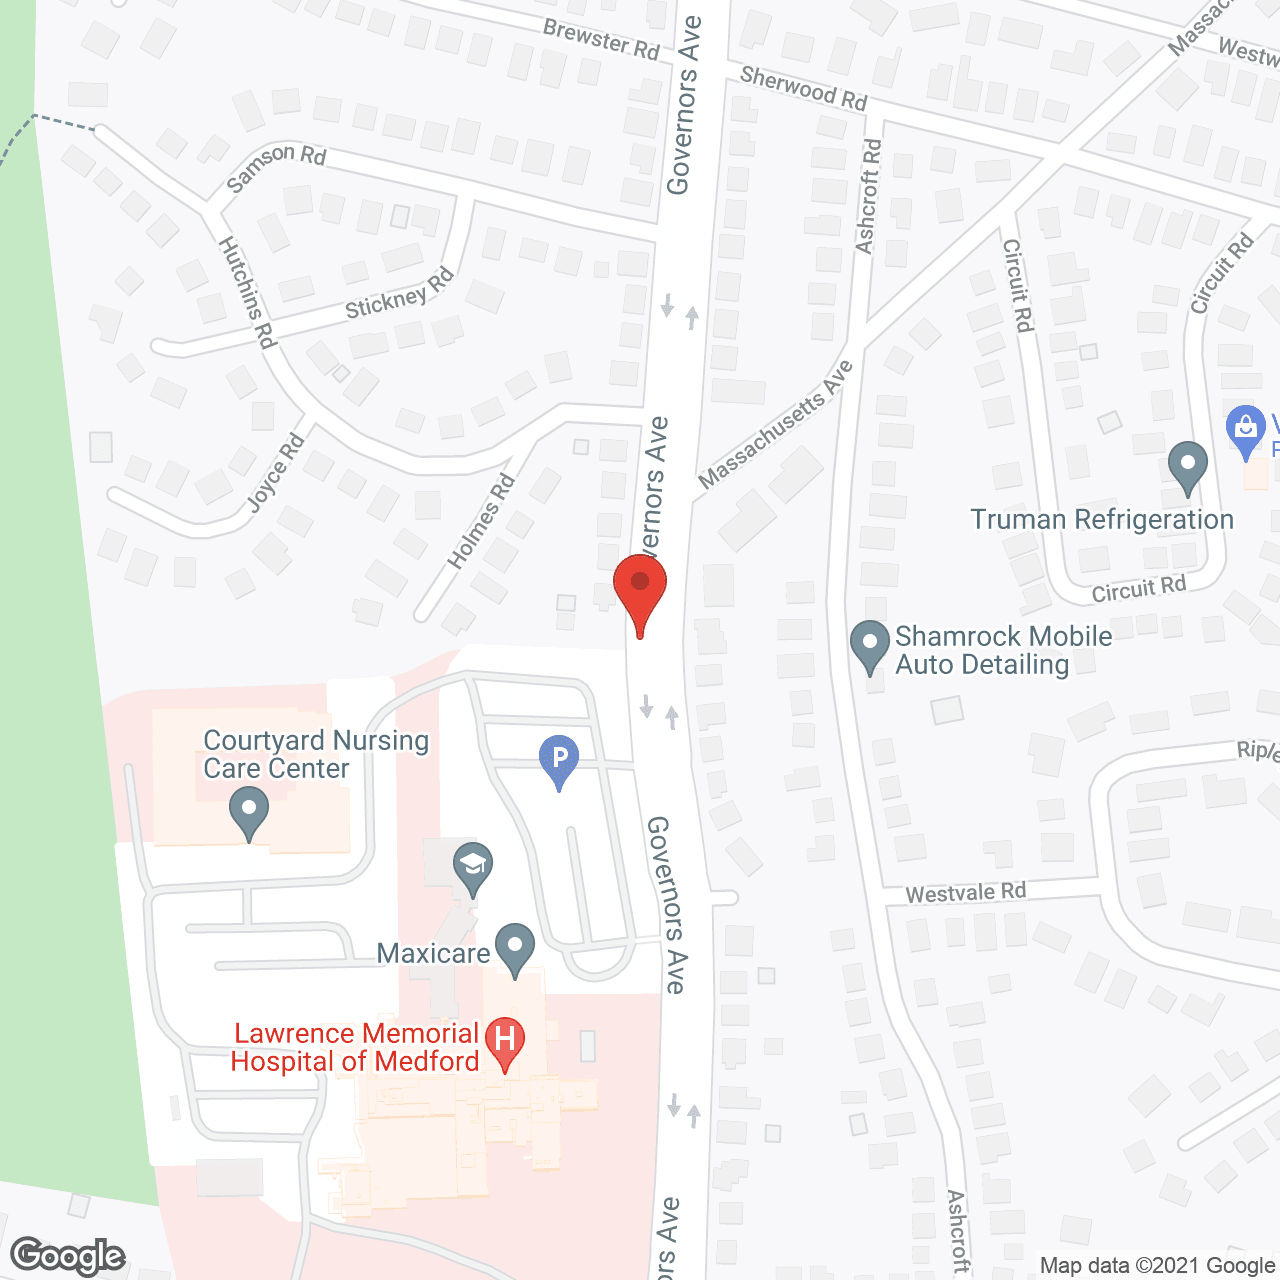 Courtyard Nursing Care Center in google map